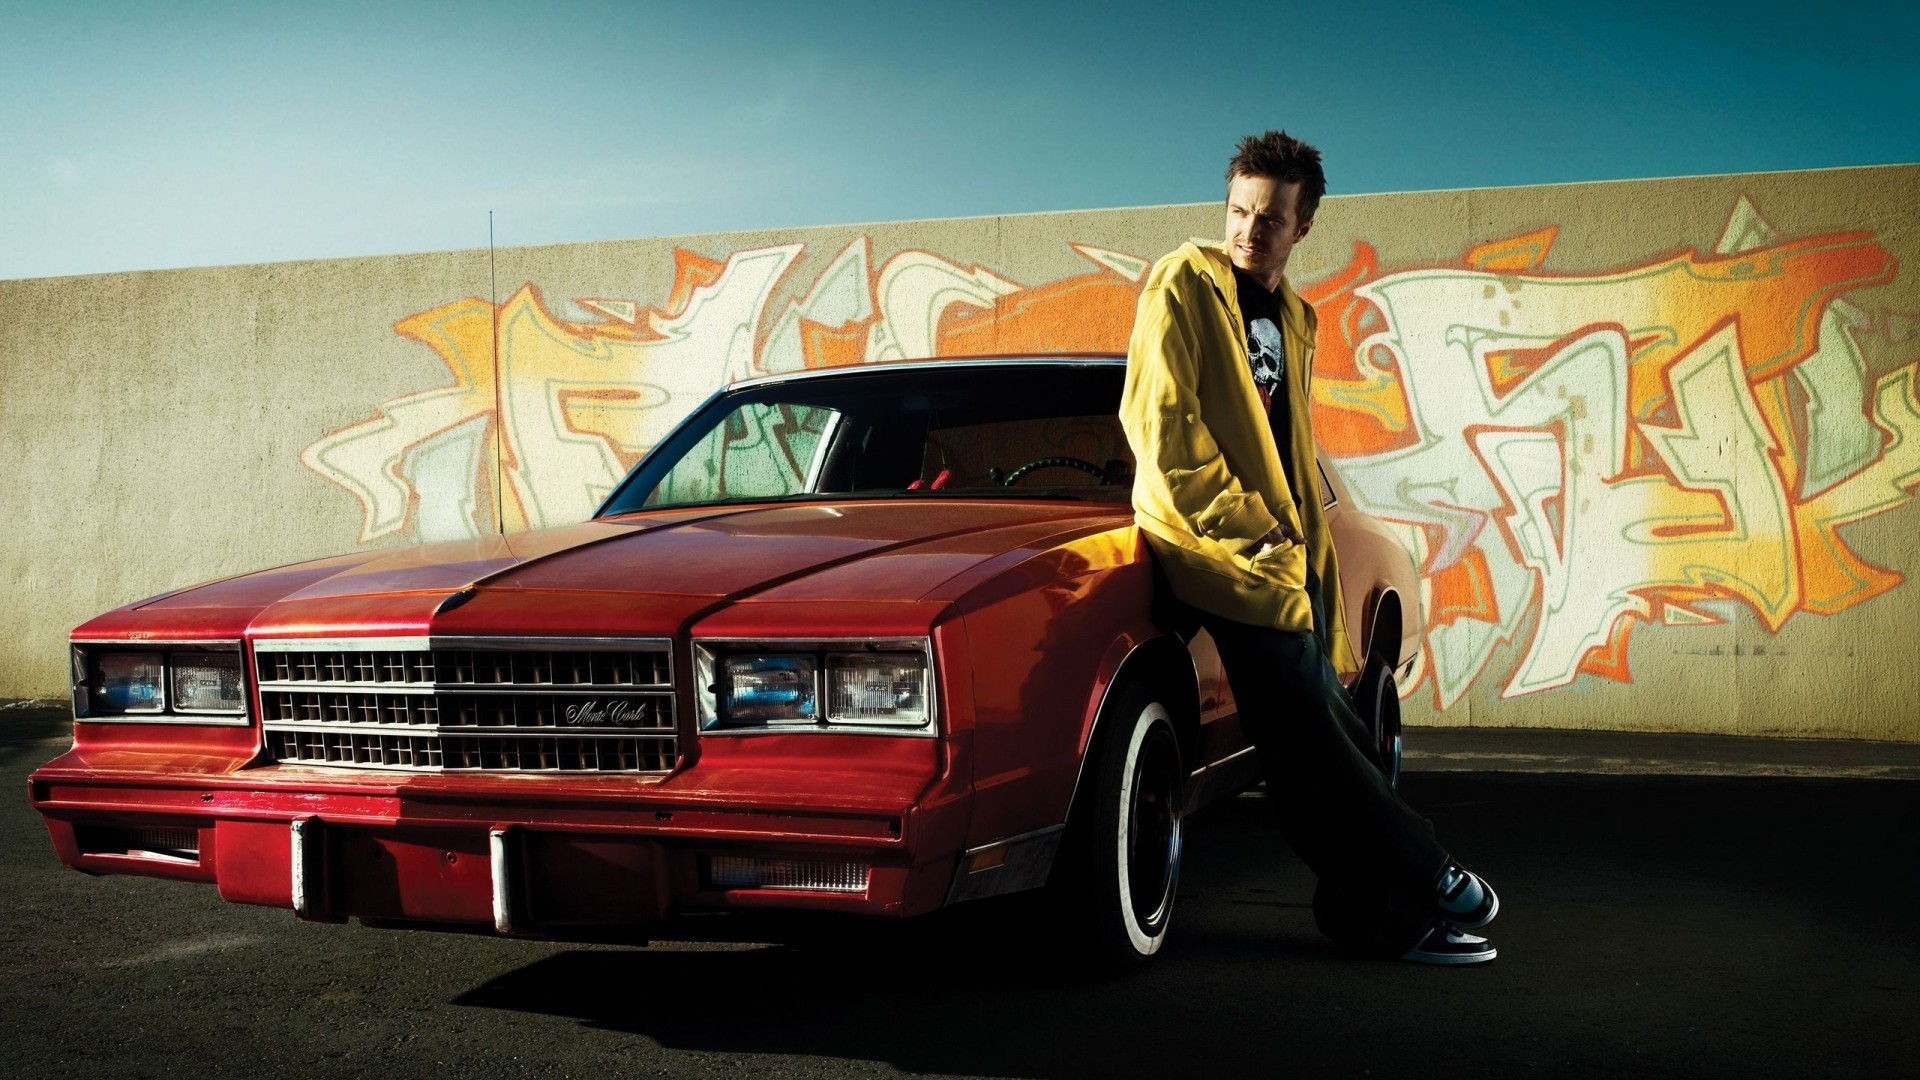 Jesse Pinkman, Aaron Paul, Breaking Bad, Red Cars, Graffiti Wallpaper